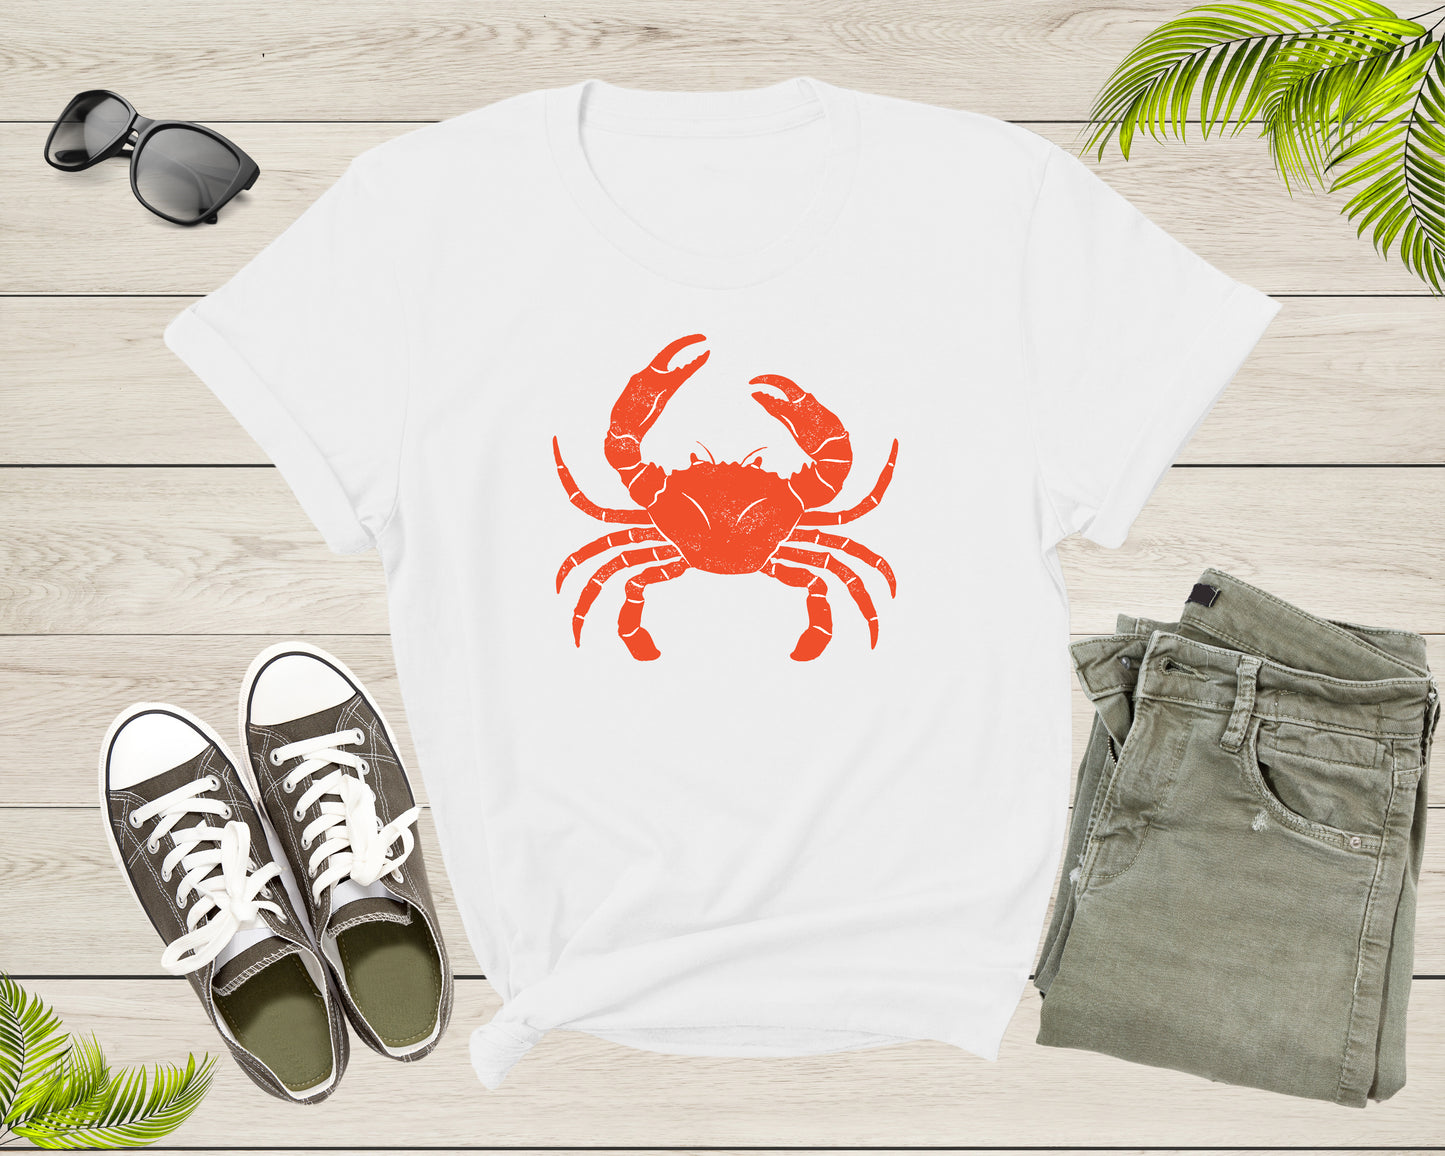 Ocean Sea King Crab Animal Cool Orange Crab for Crab Lovers T-Shirt Crab Lover Gift T Shirt for Men Women Kids Boys Girls Teens Tshirt